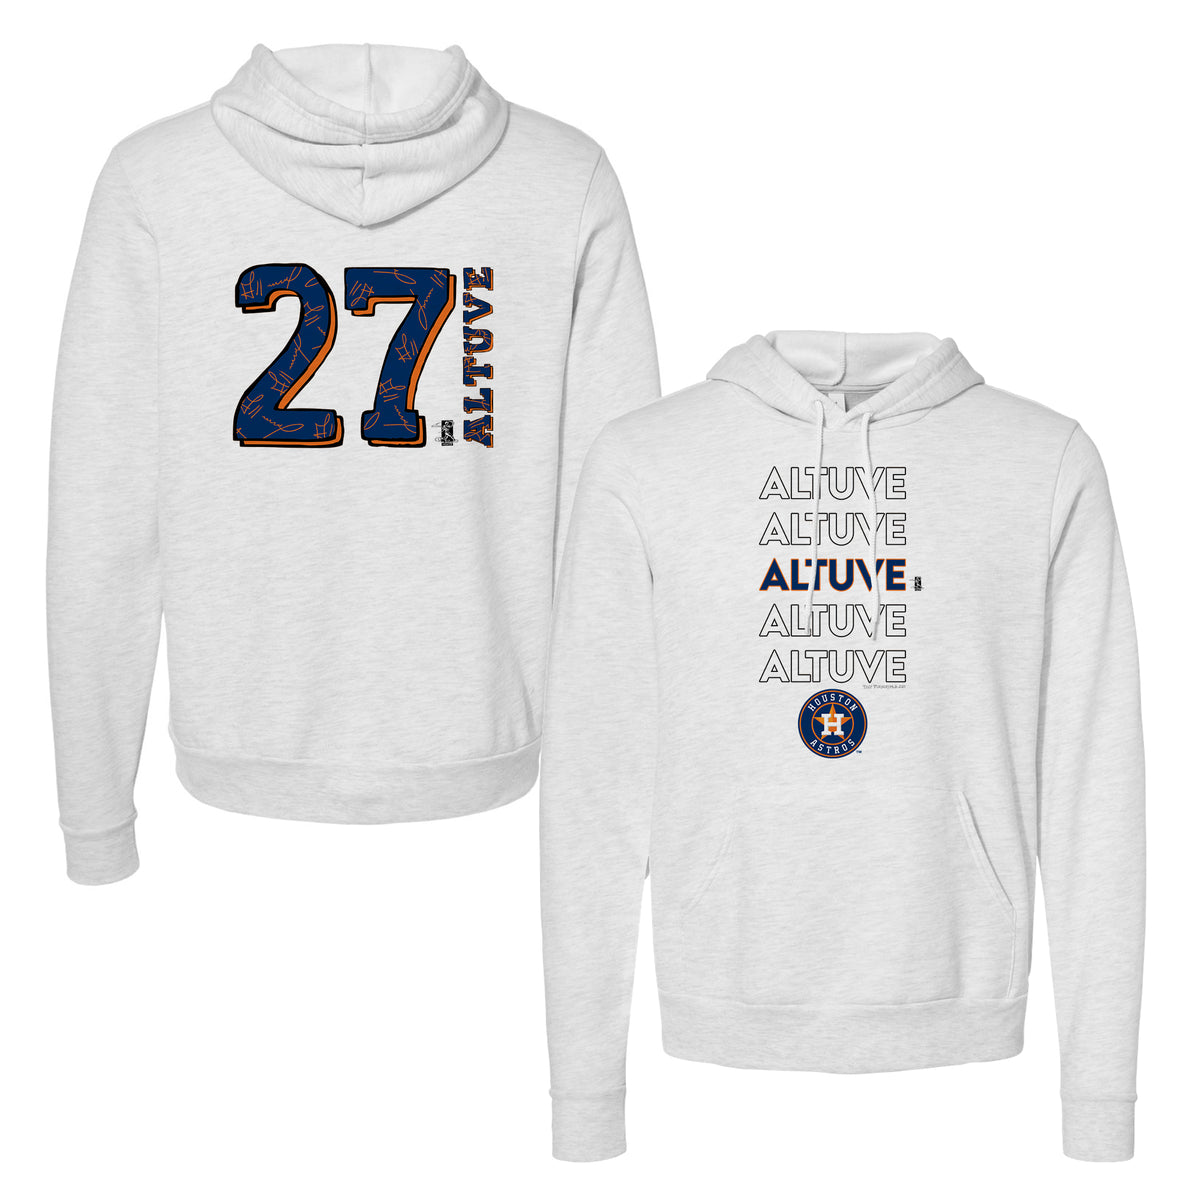 Official Jose Altuve Houston Astros T-Shirts, Astros Shirt, Astros